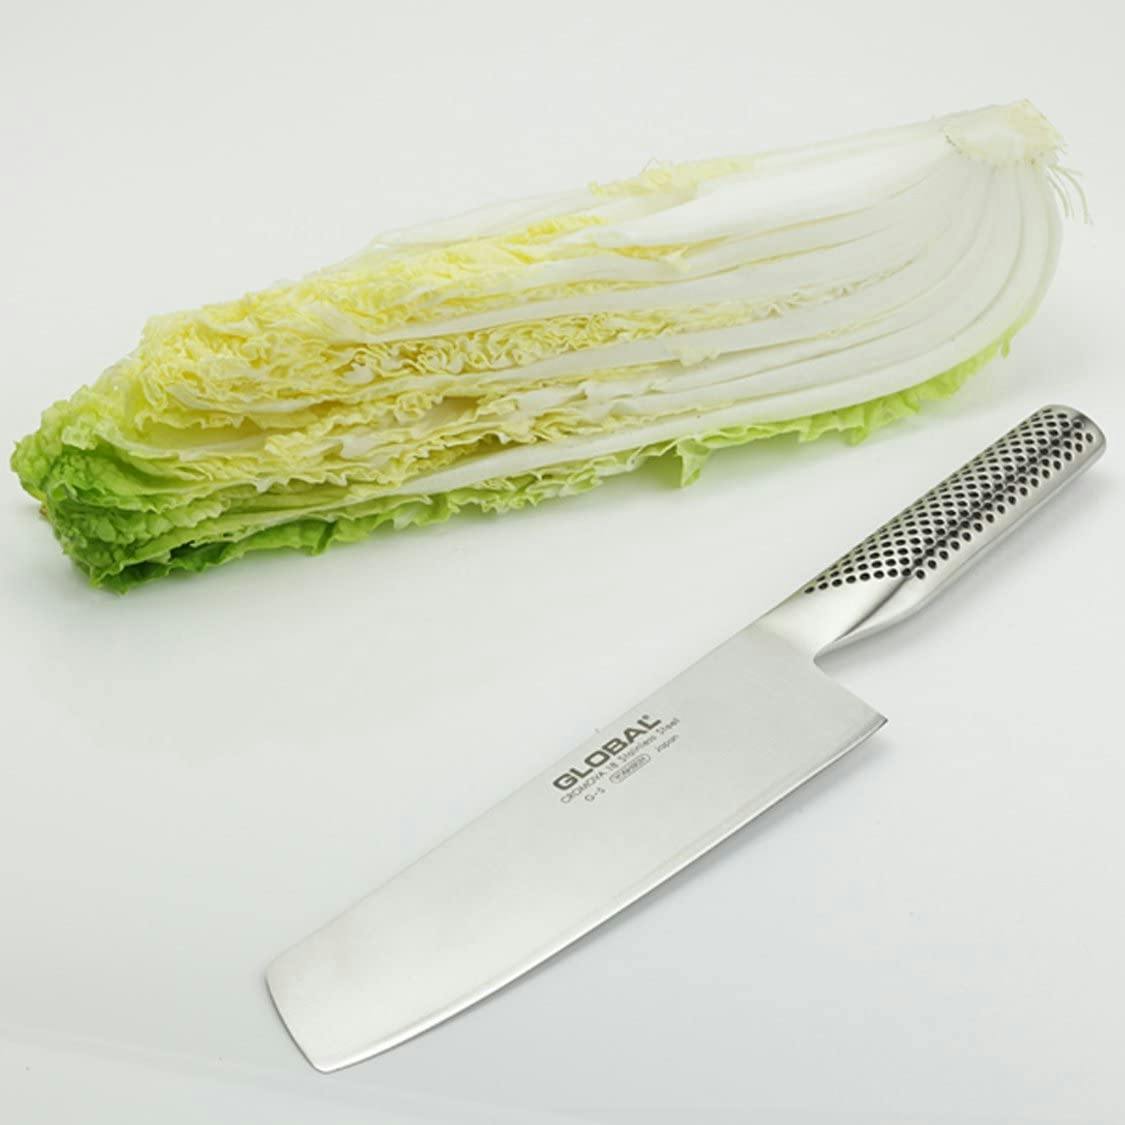 Global Classic 7" Vegetable Knife